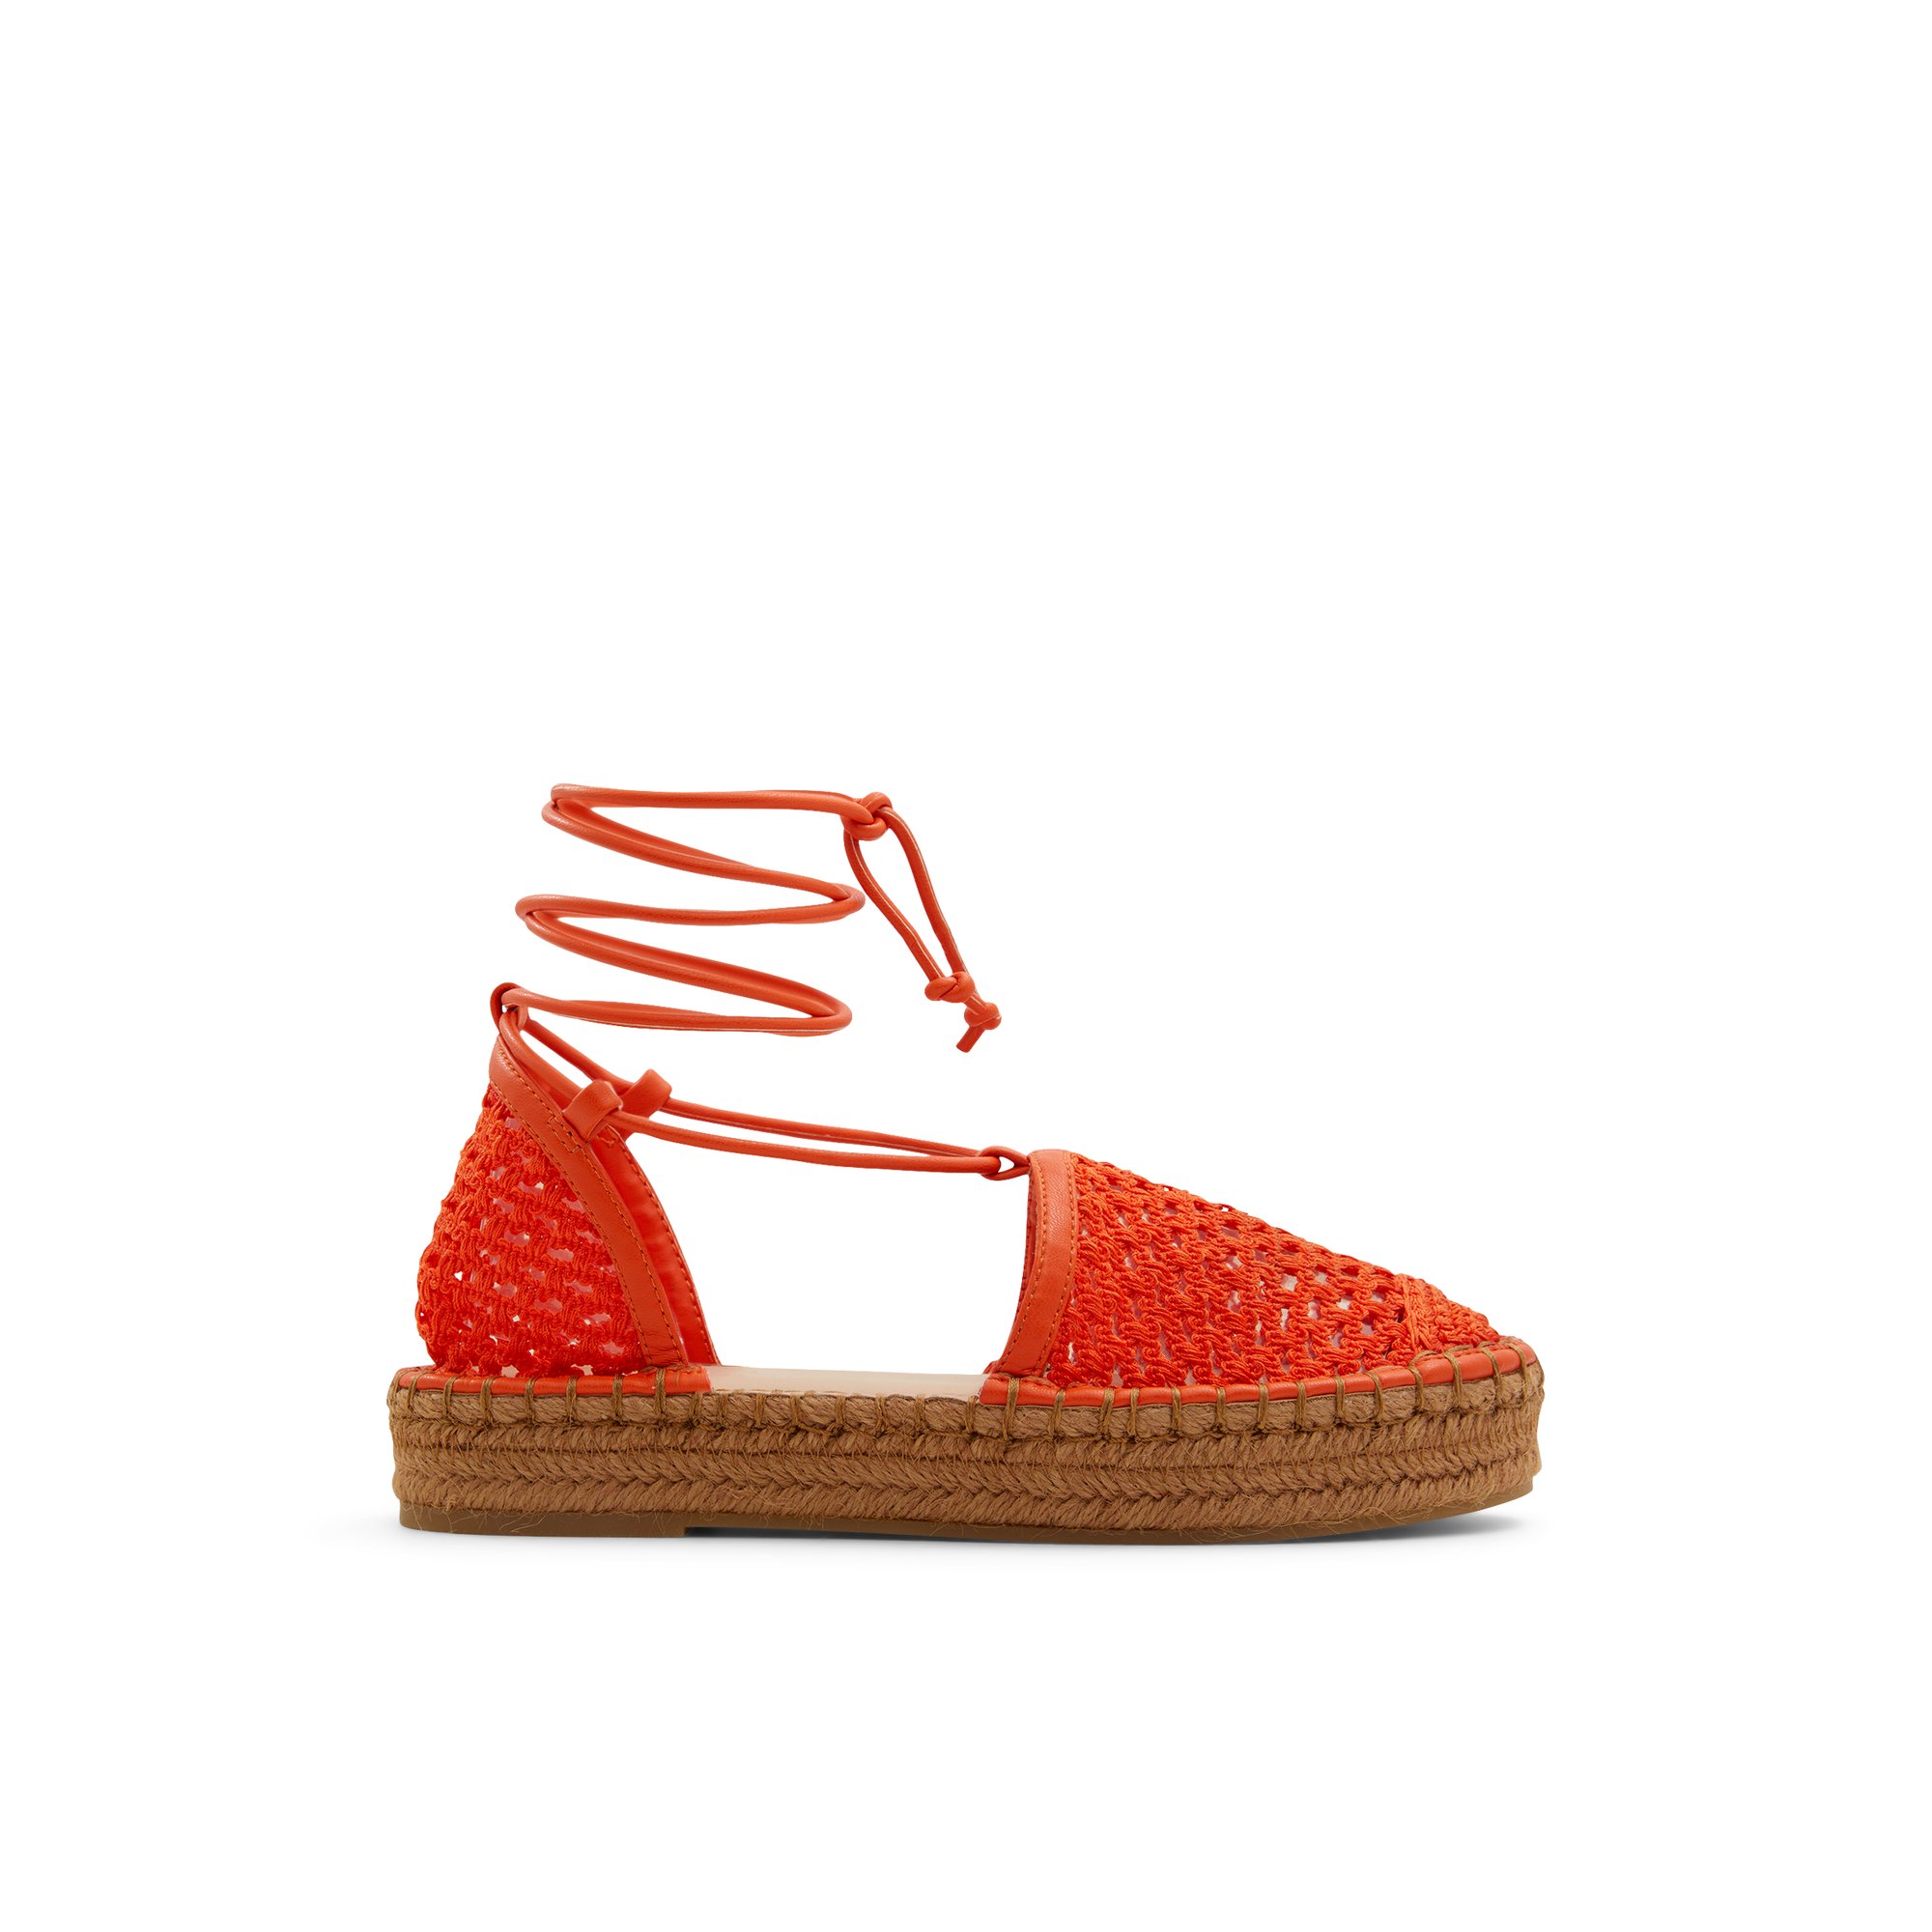 ALDO Picot - Women's Sandals Wedges - Orange